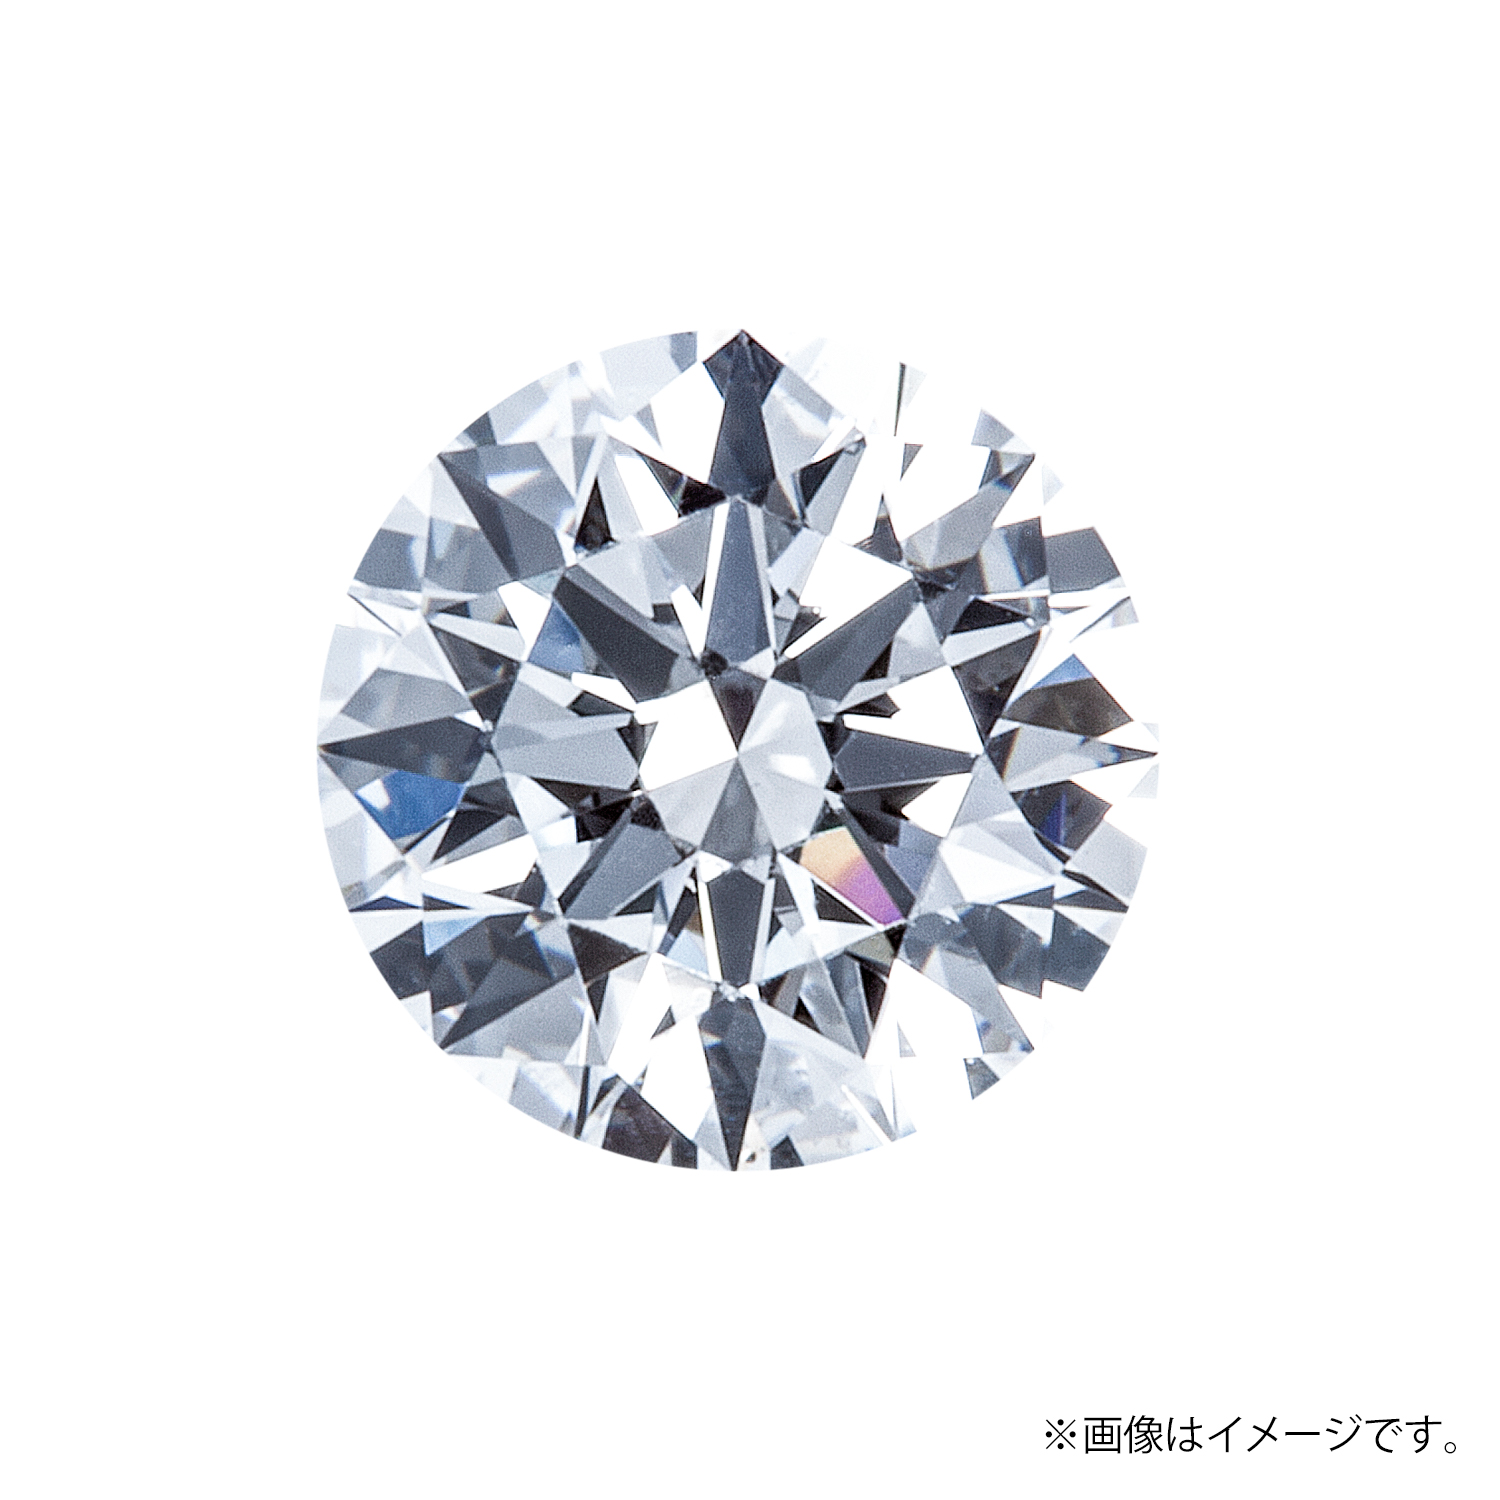 0.262ct Round ダイヤモンド / F / SI1 / 3EX-H&C